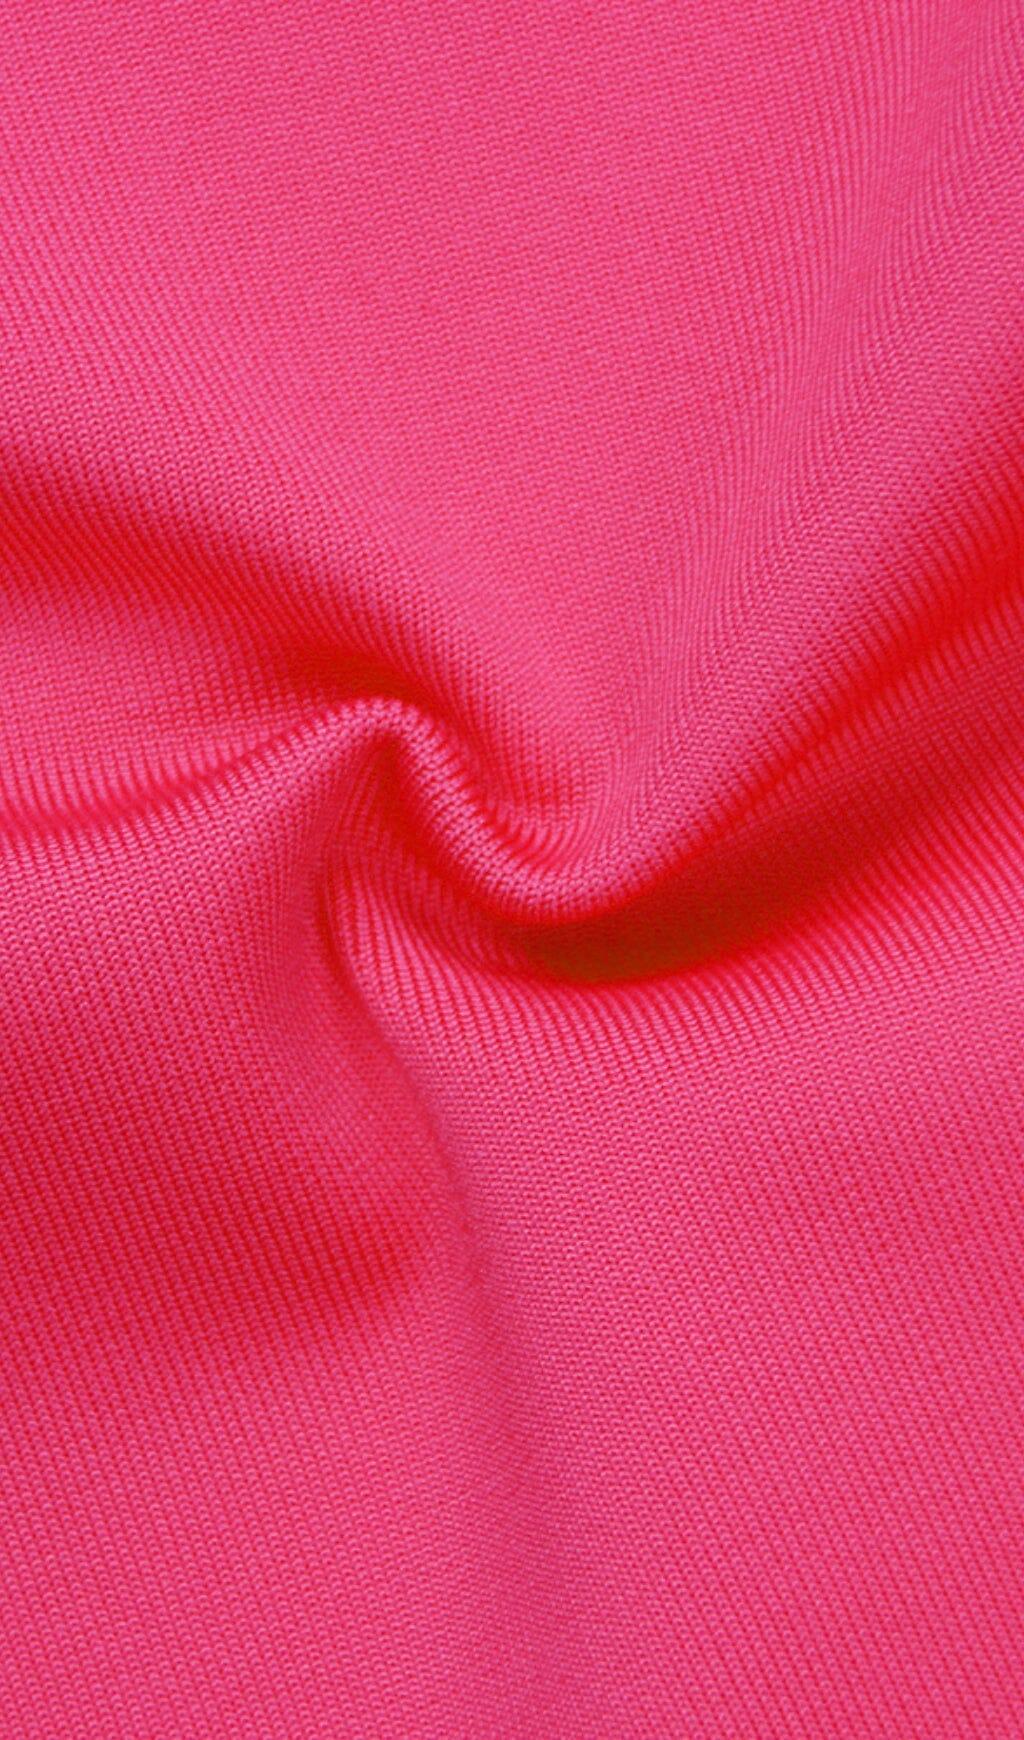 LONG SLEEVE OPEN BACK SLIT DRESS IN ROSE RED